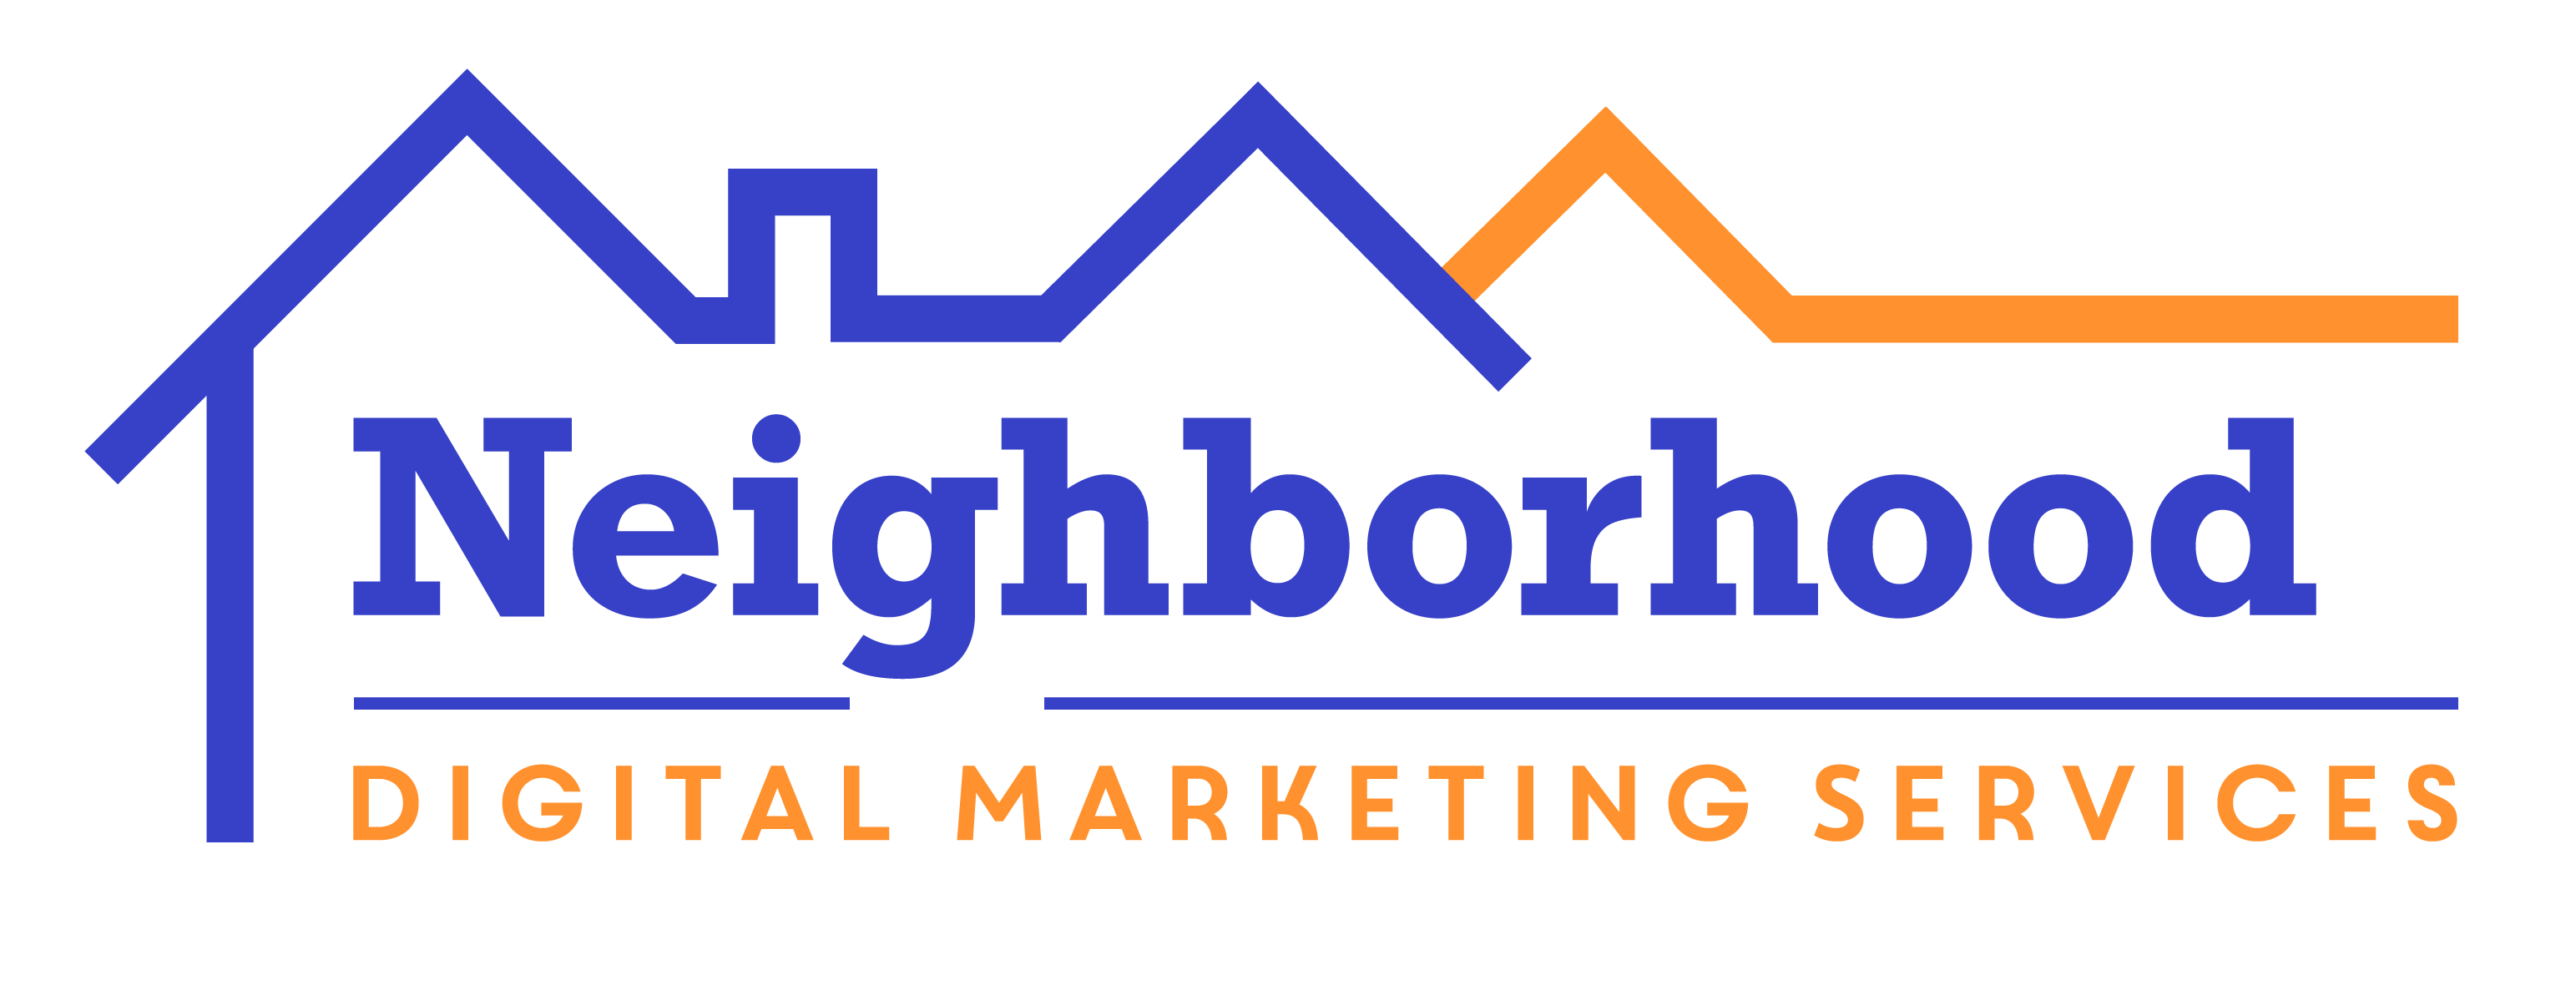 Neighborhood Digital Marketing Services